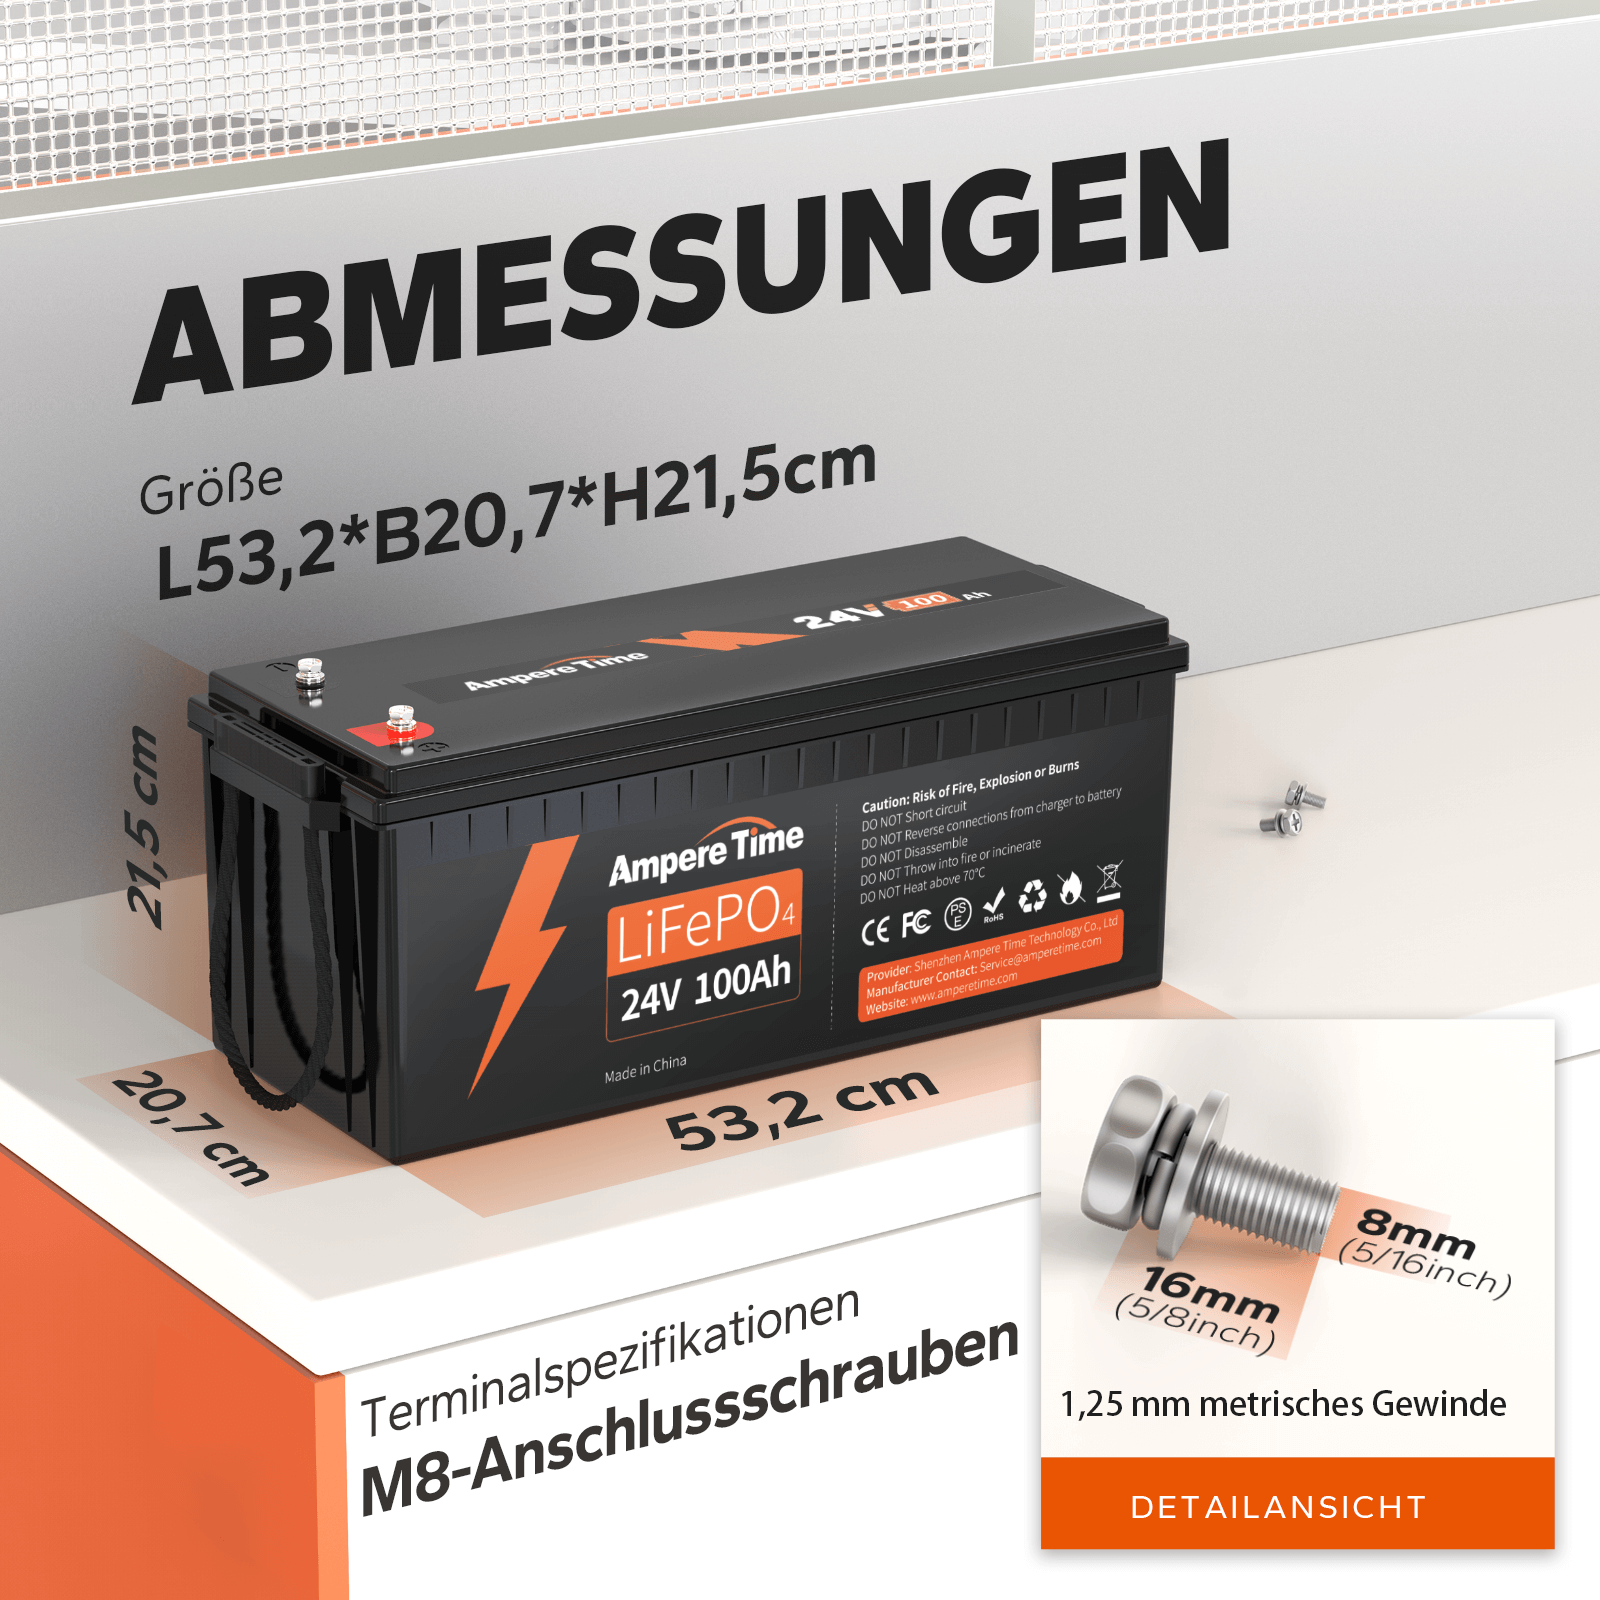 Ampere Time 24V 100Ah LiFePO4 Batterie mit 100A BMS, Max. 2560Wh Energie Amperetime DE